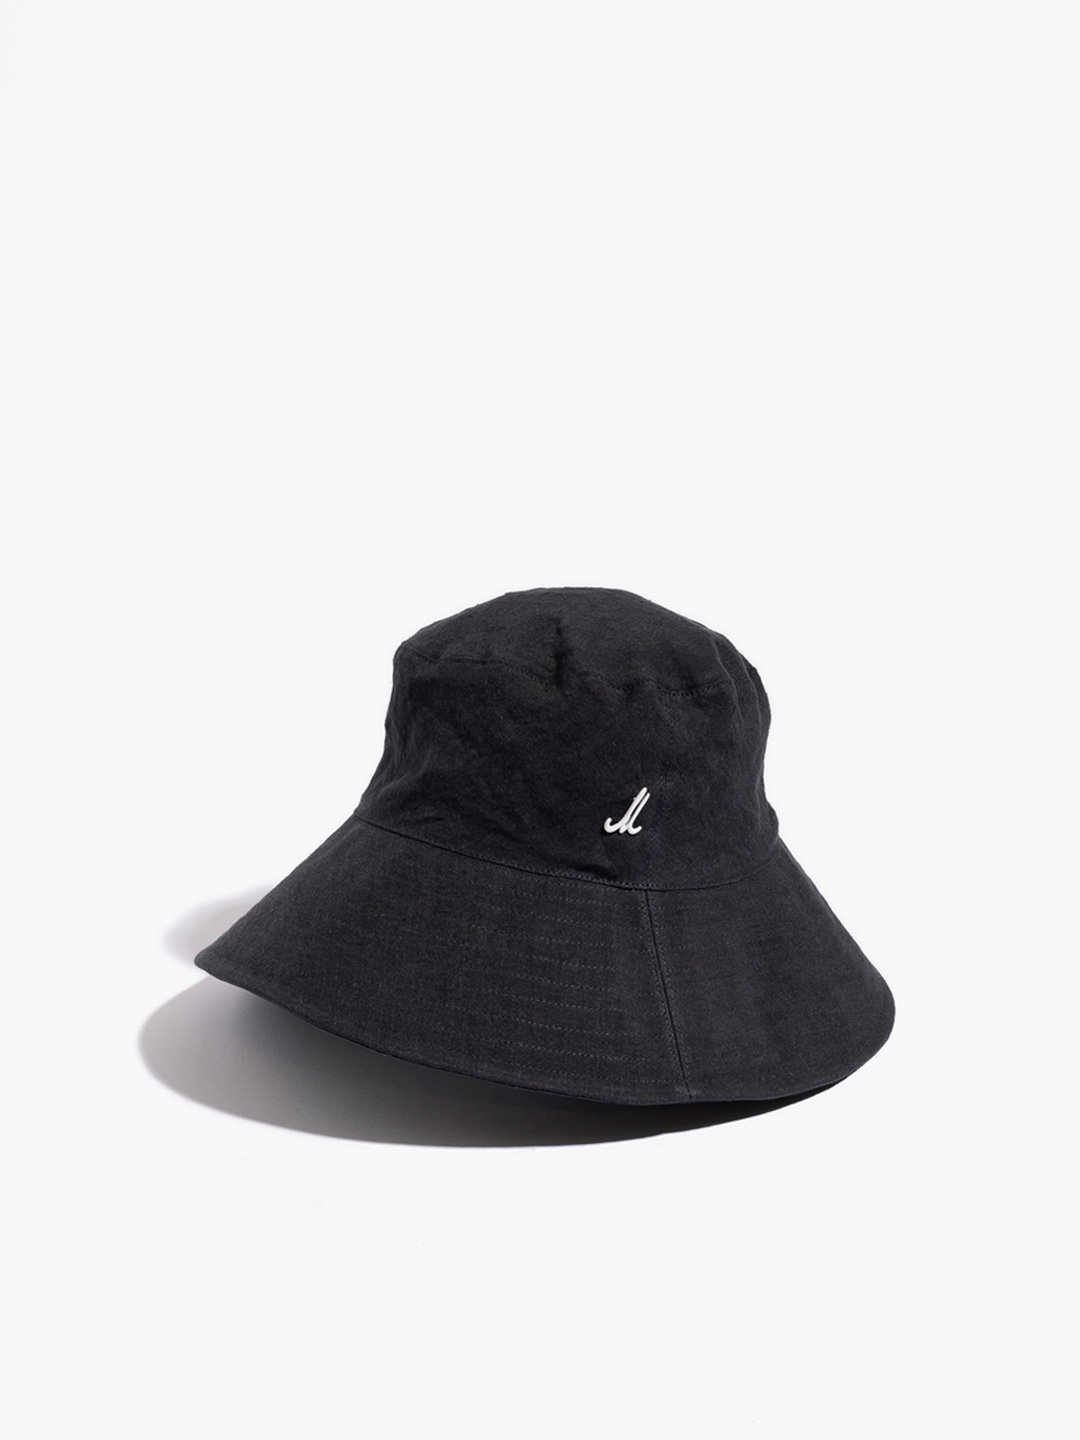 WIMBERT Bucket Hat - Charcoal